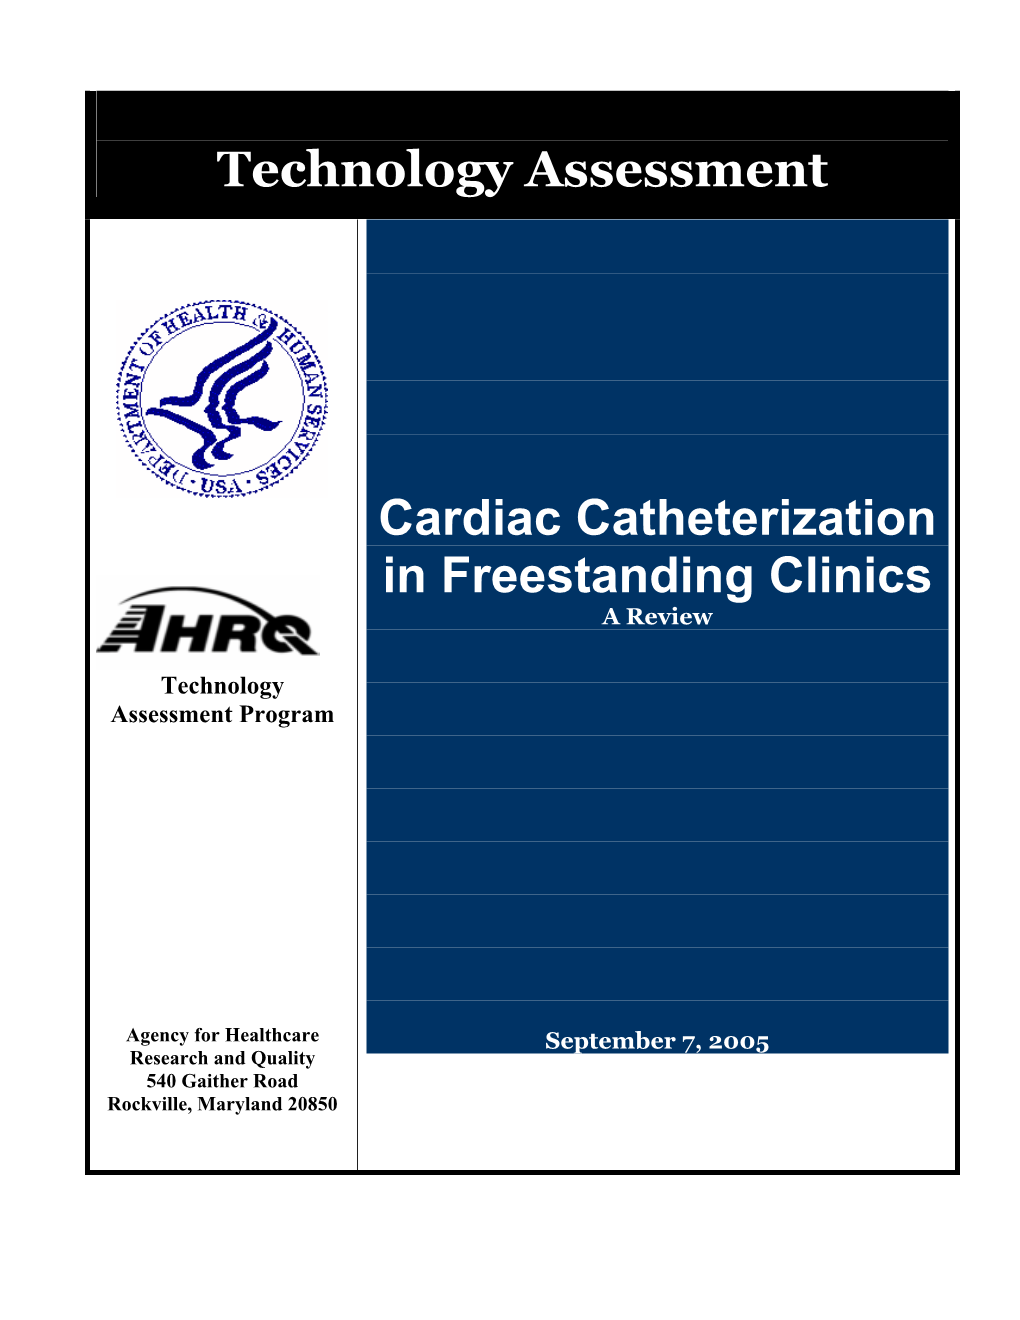 Technology Assessment Cardiac Catheterization in Freestanding Clinics